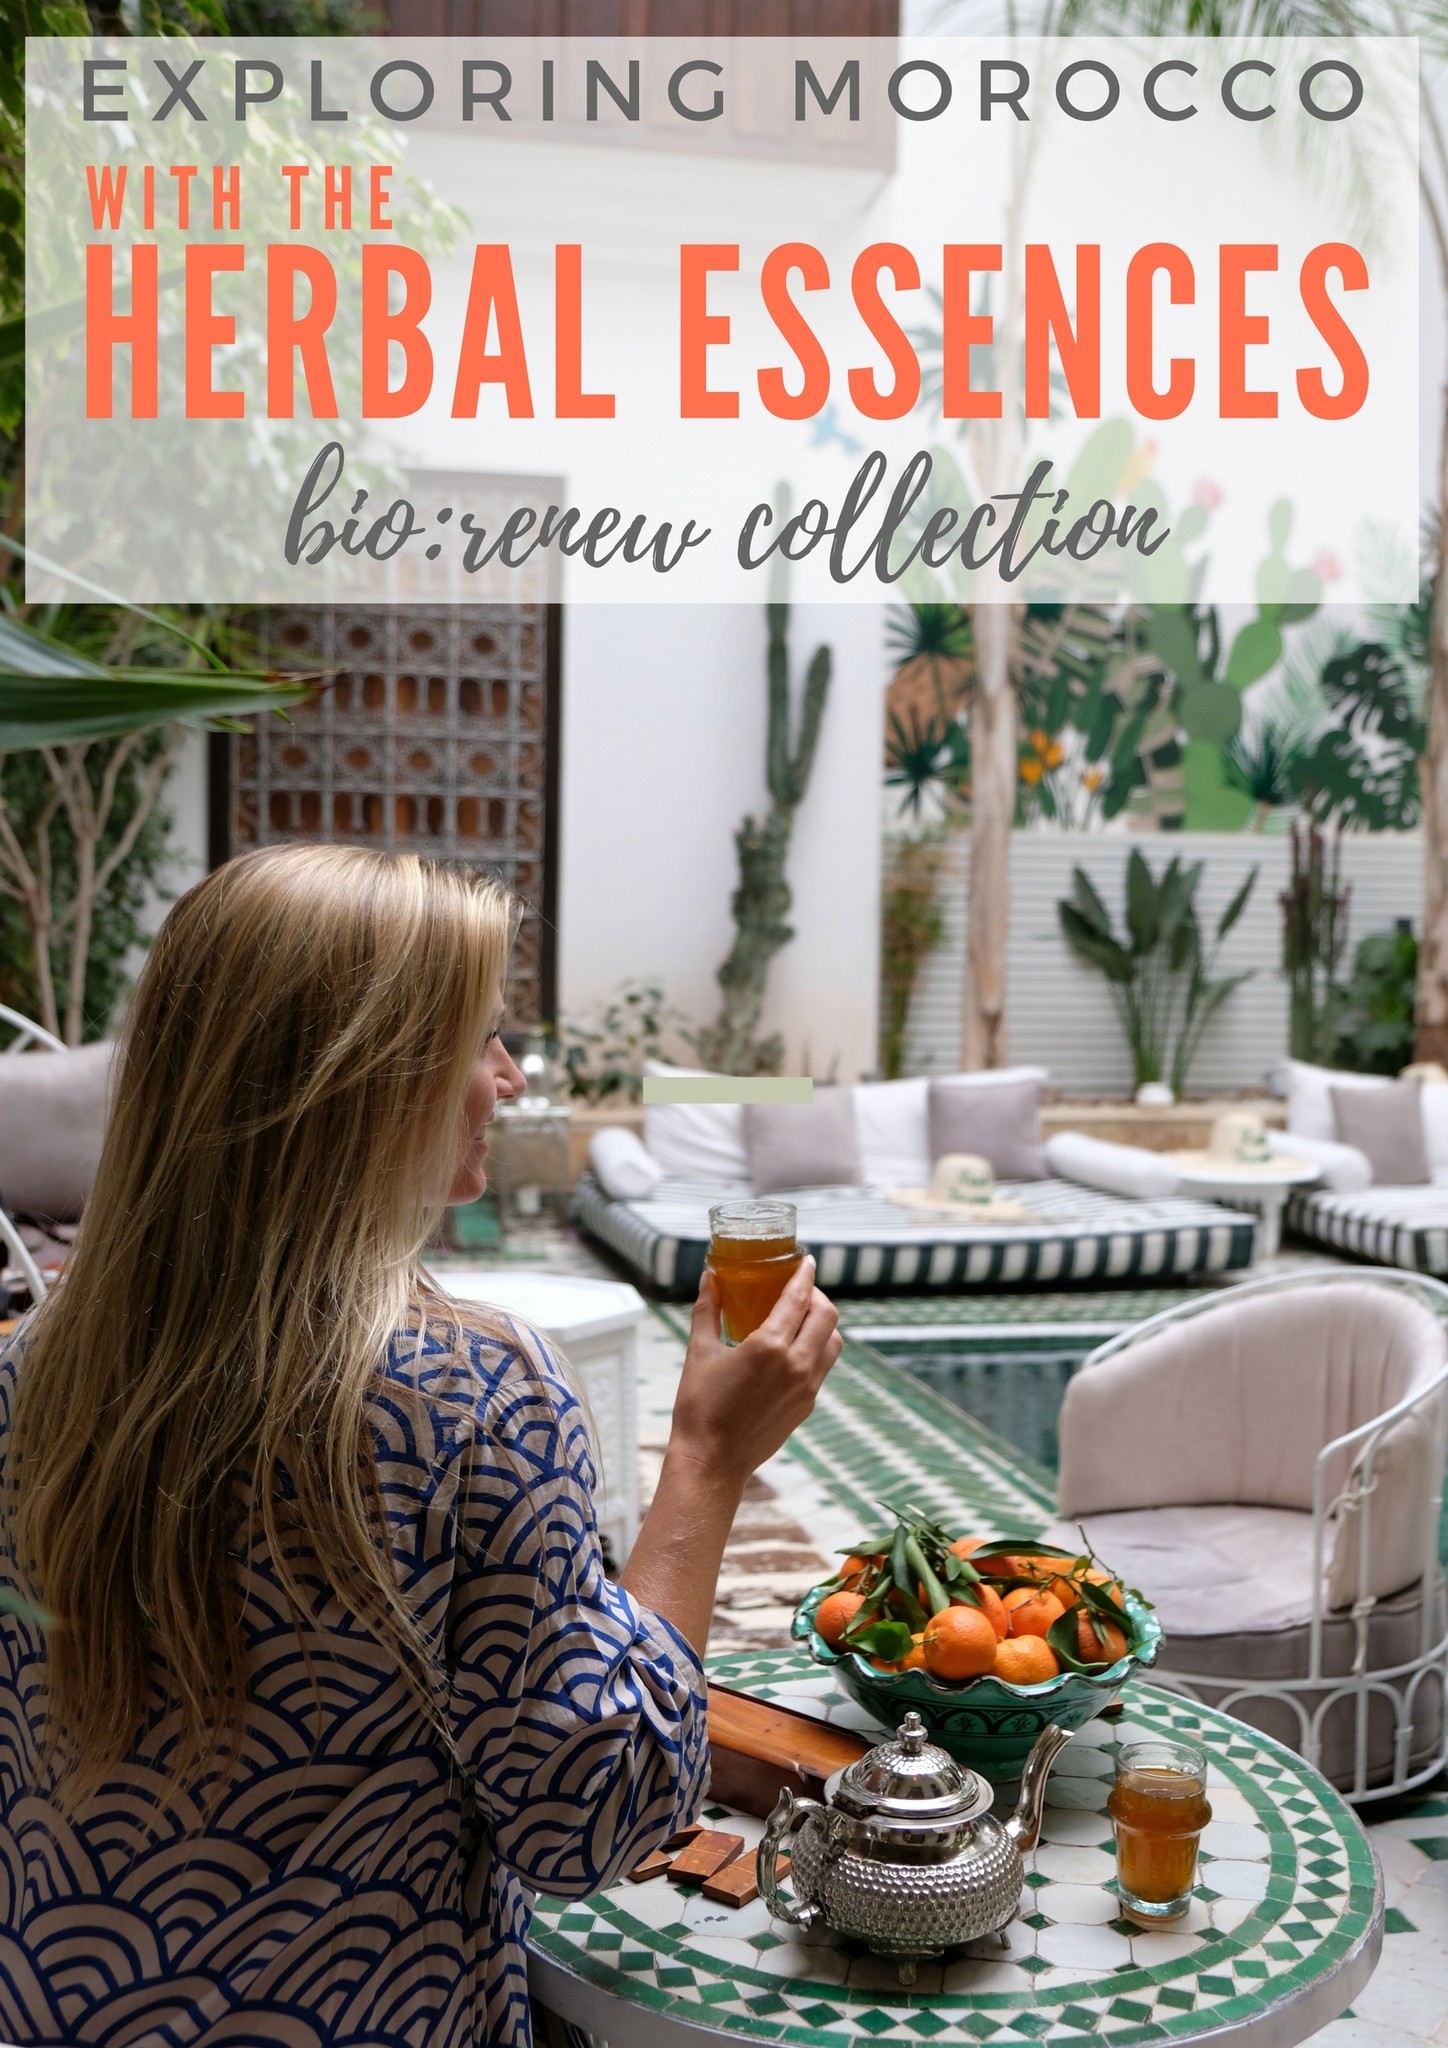 Herbal Essences bio renew